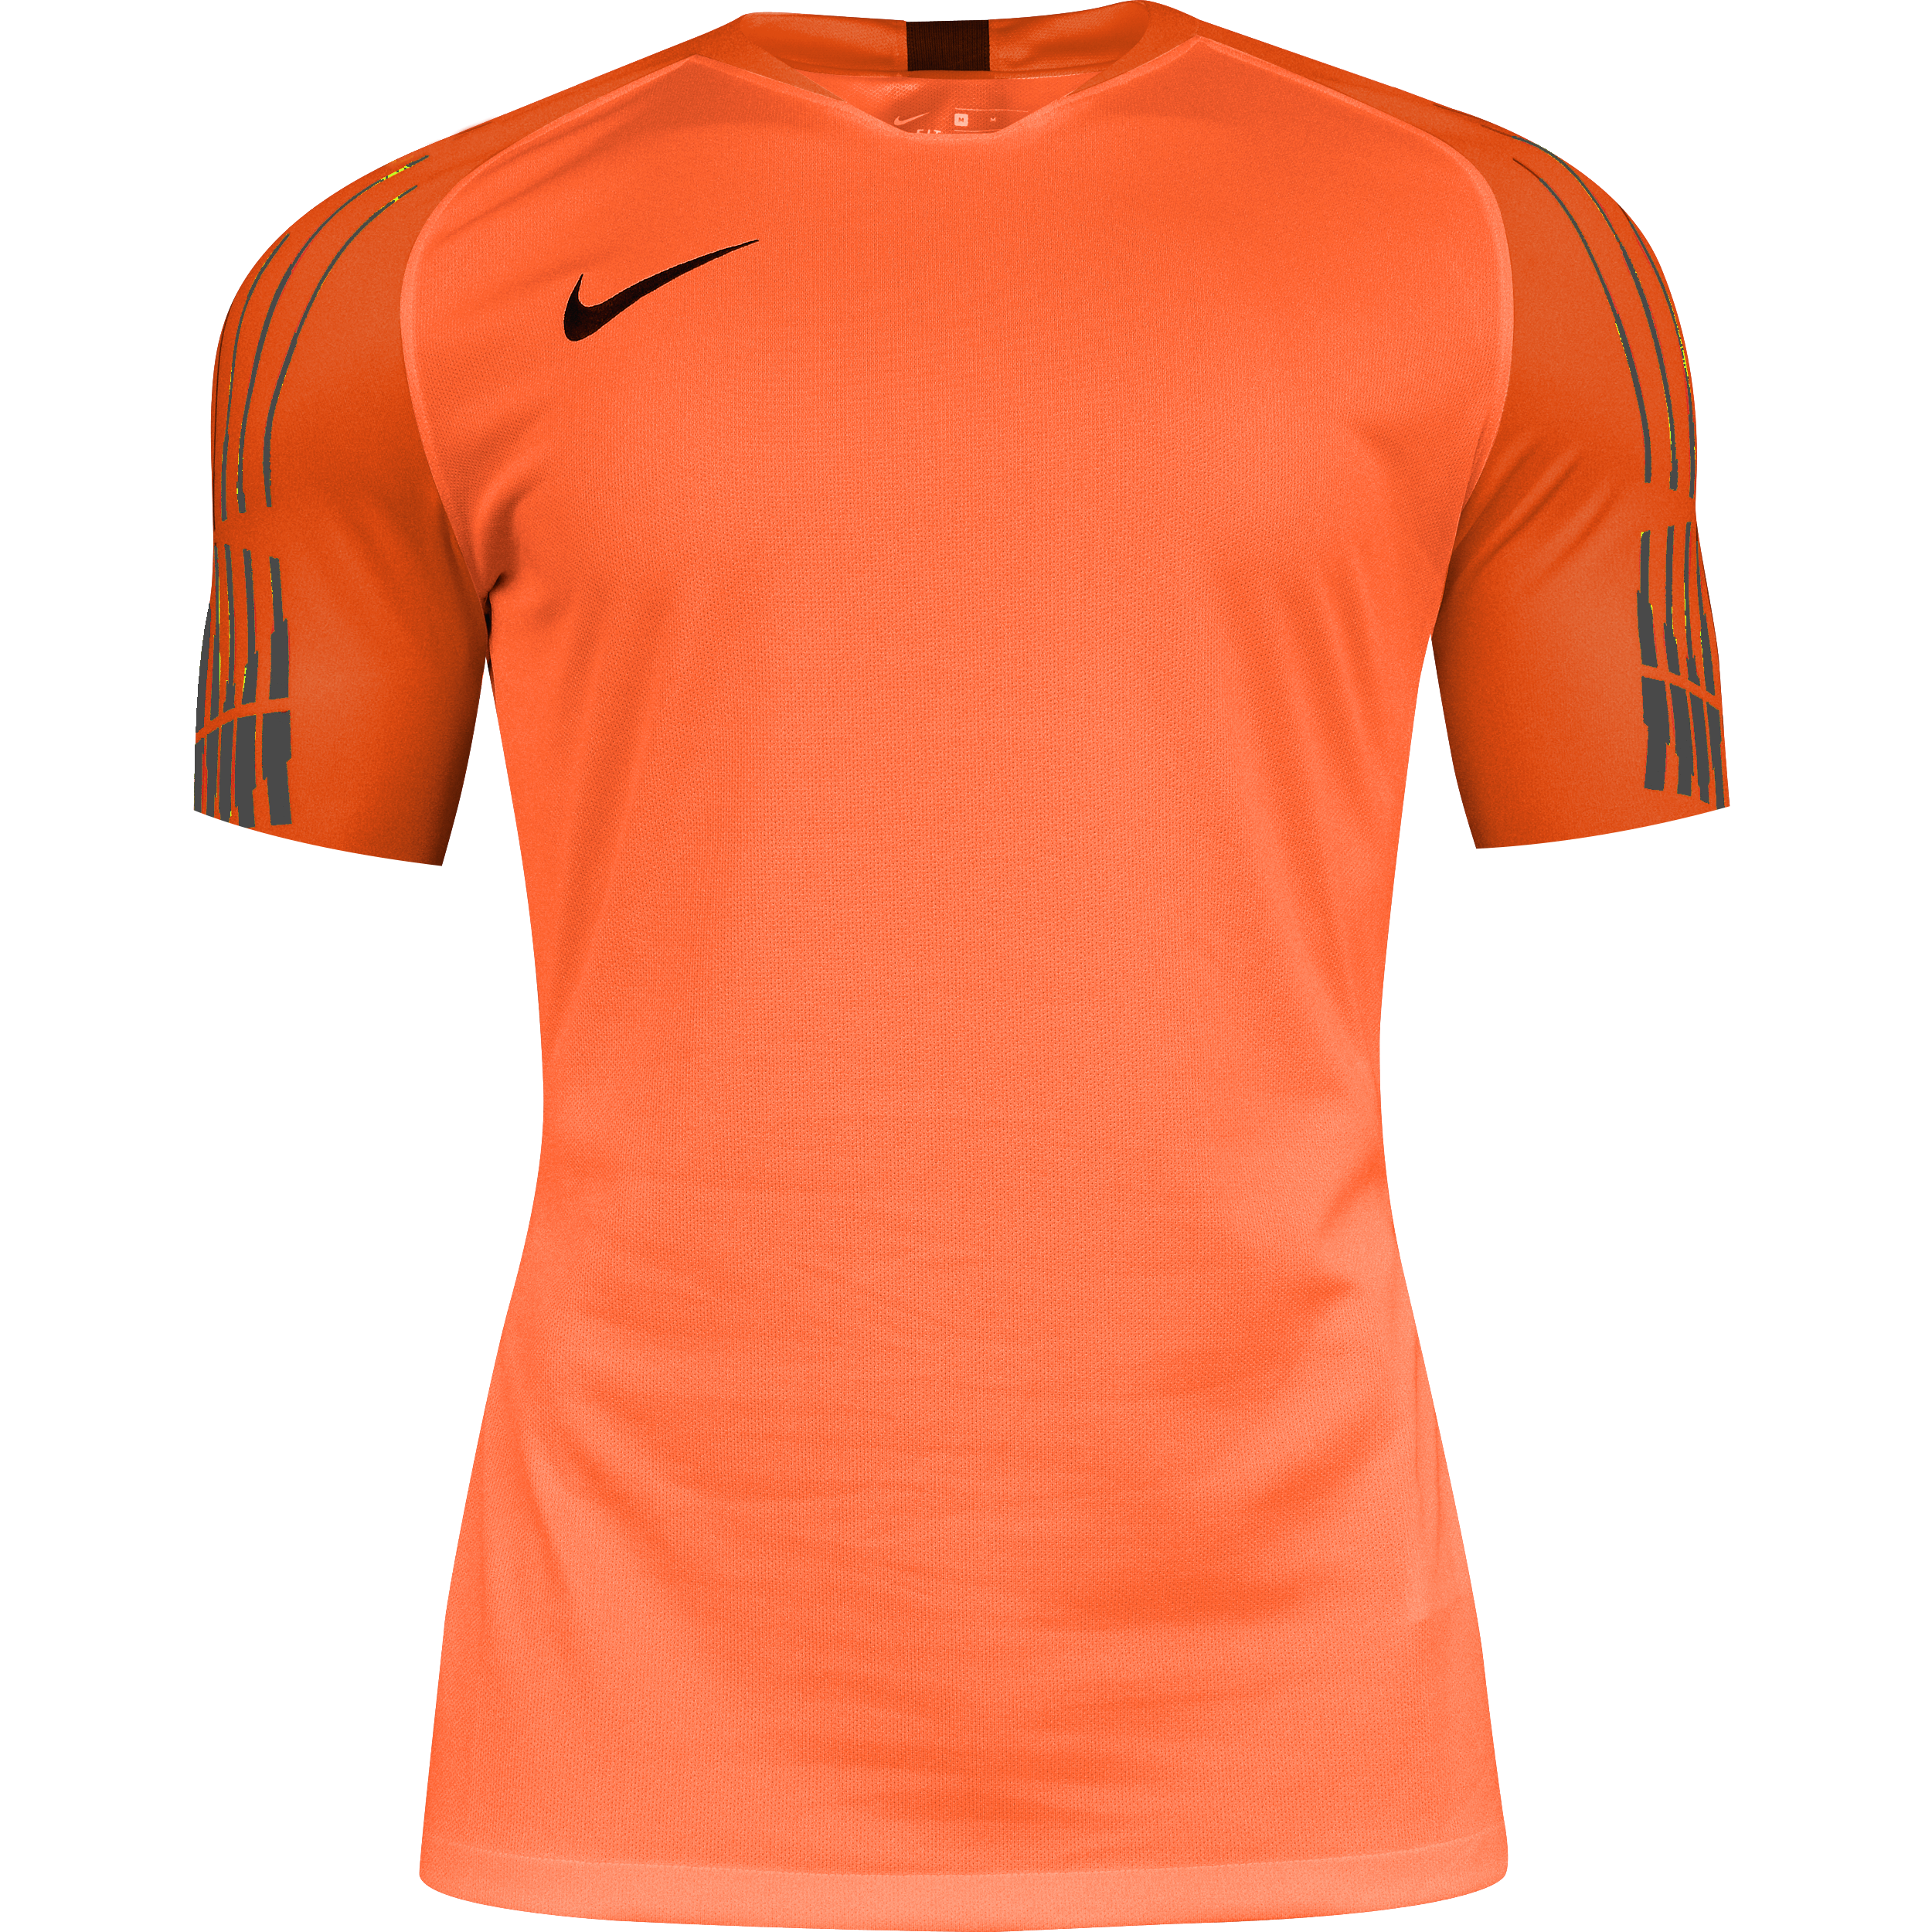 orange colour jersey